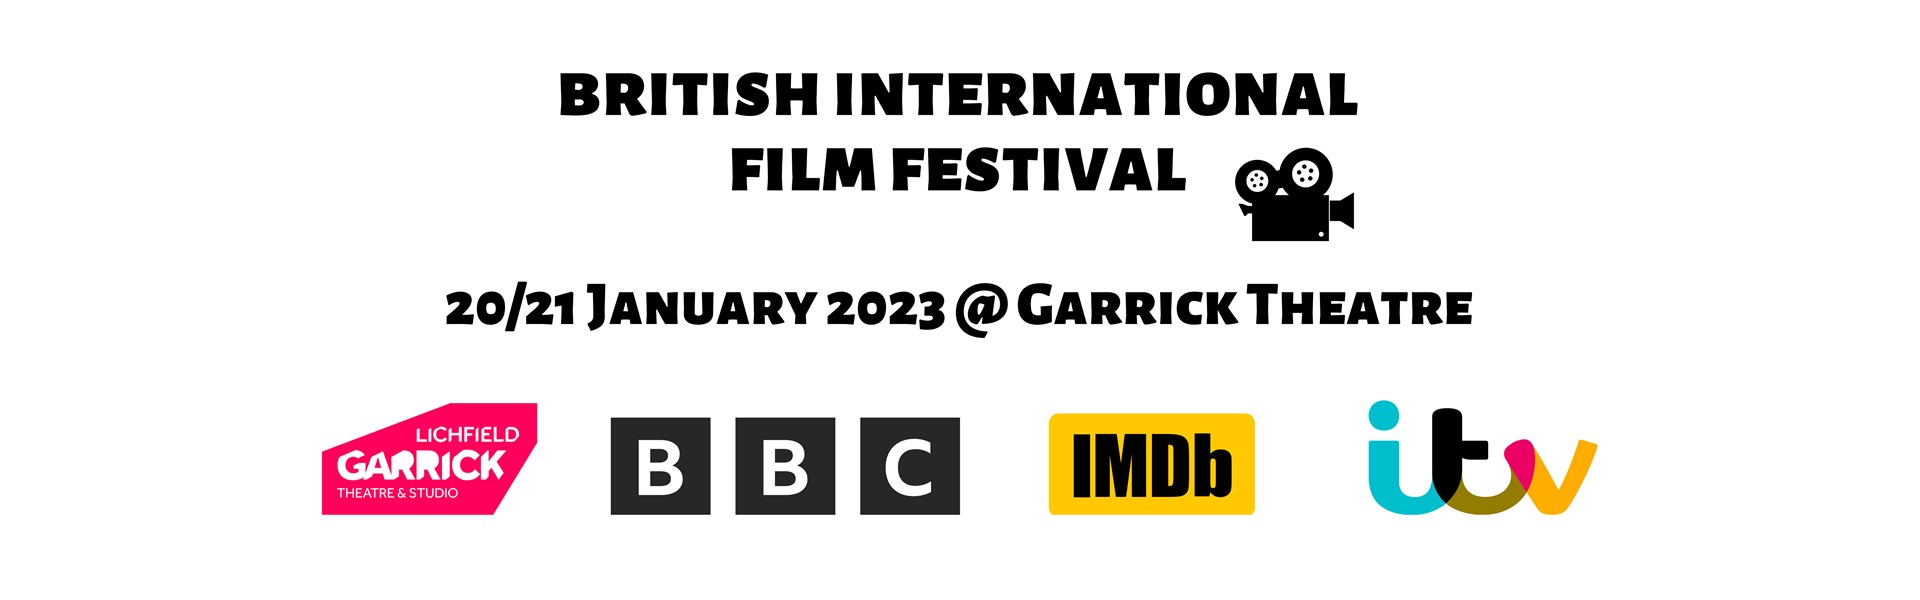 Timeslot Bookings - British International Film Festival 2023